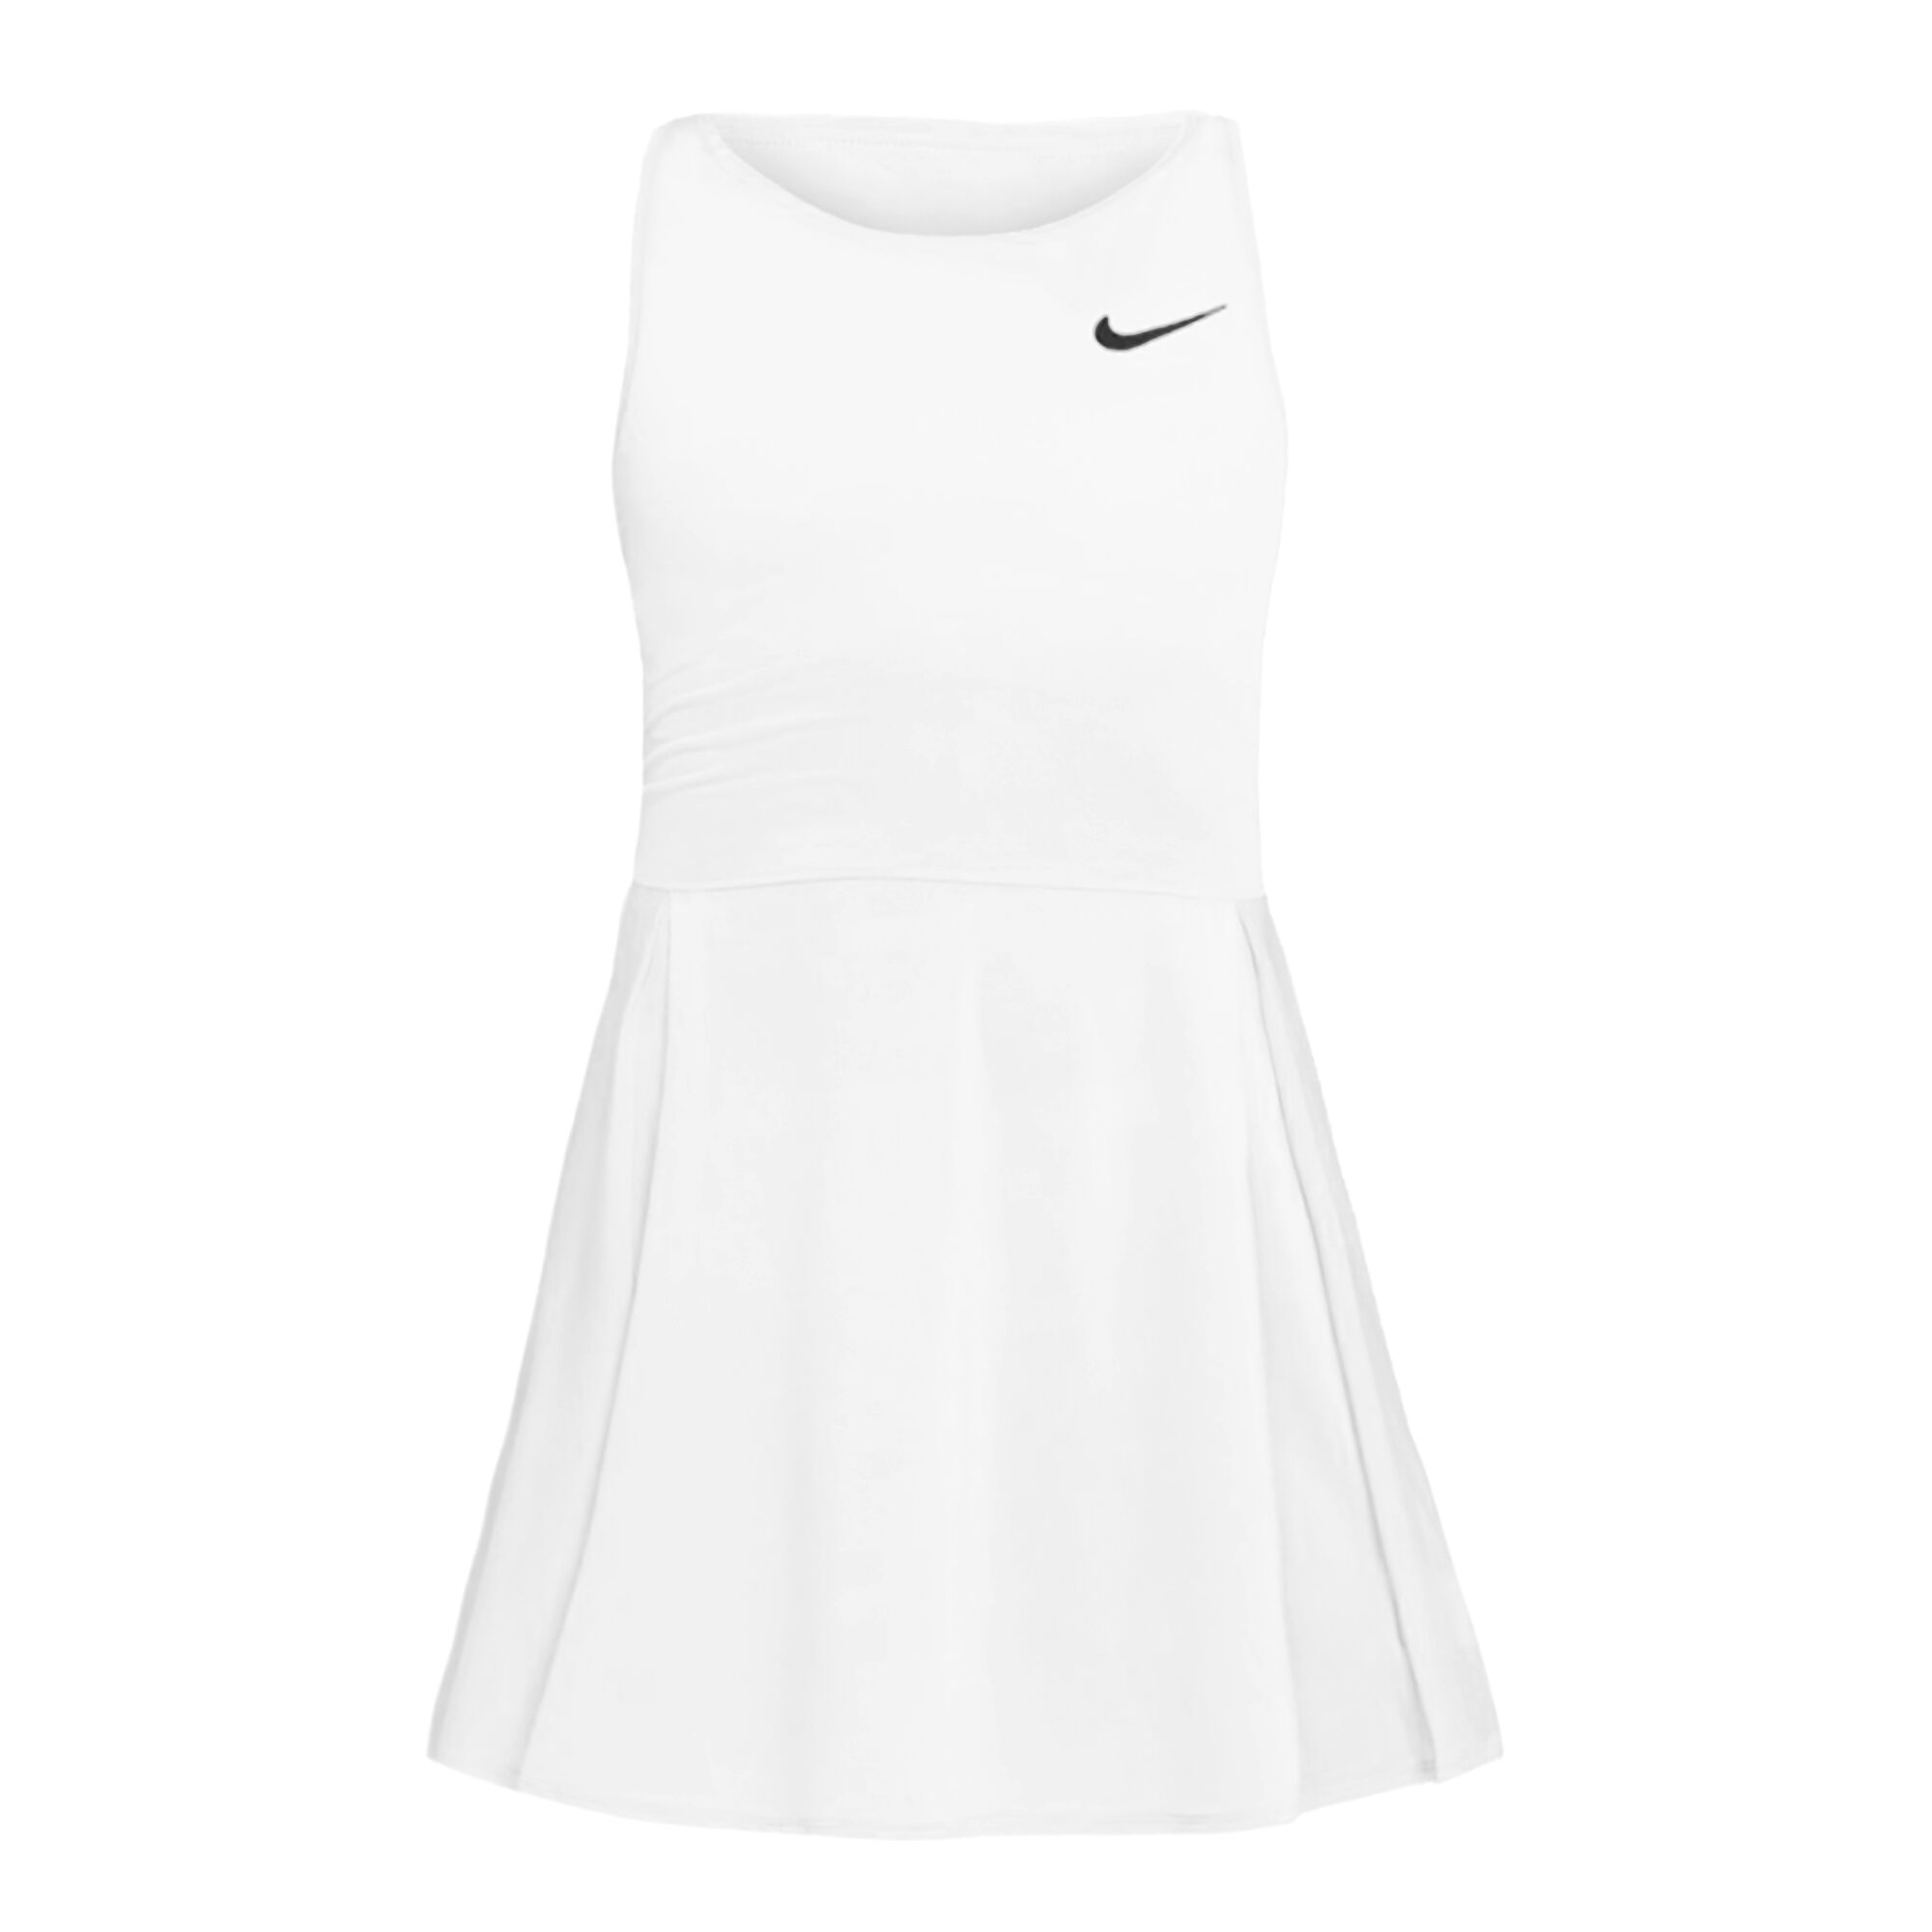 Buy Nike Court Advantage Dress Women White, Black online